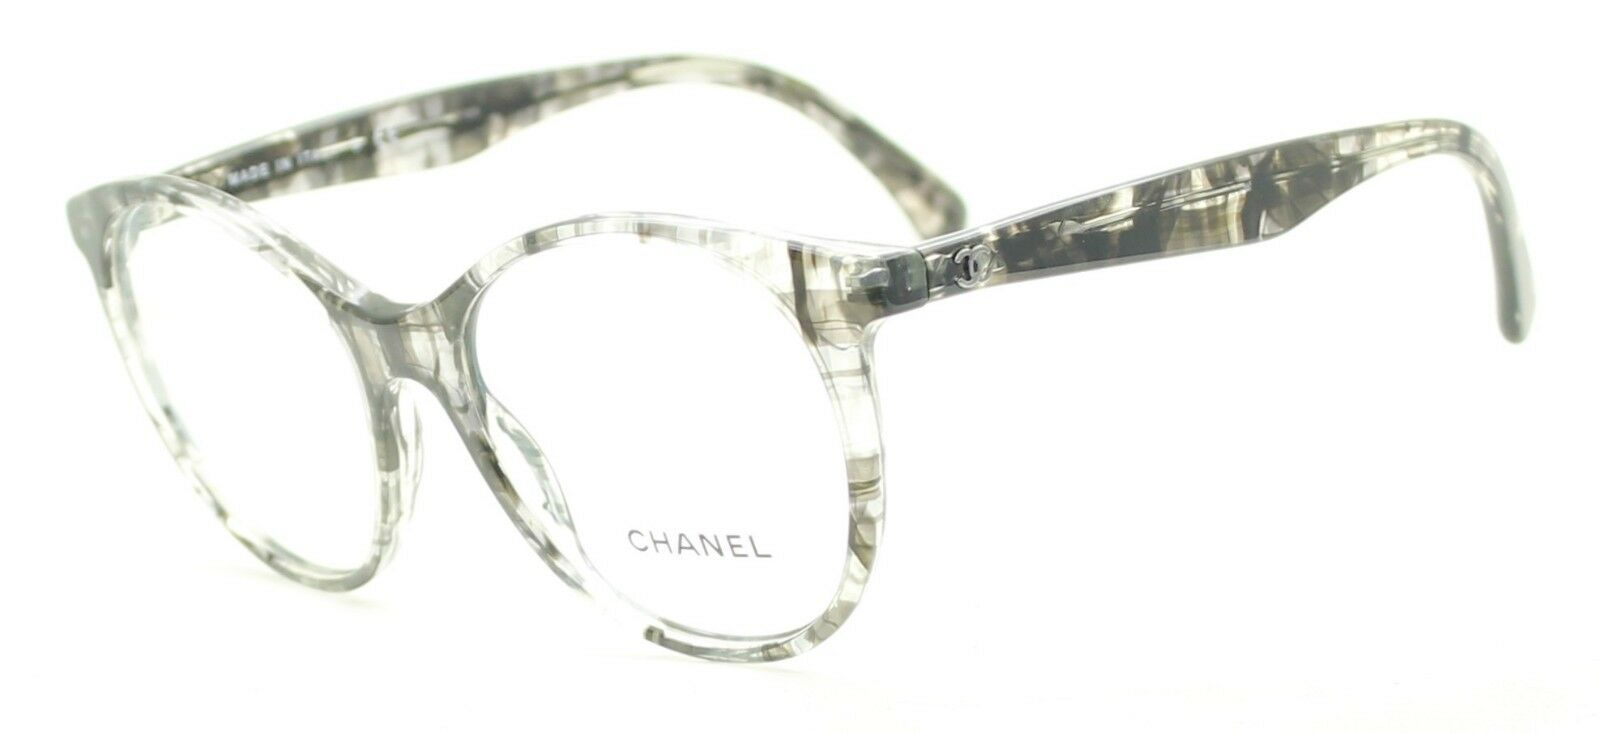 Chanel 3401 1534 Glasses  Chanel optical, Prescription eyewear, Luxury  eyewear